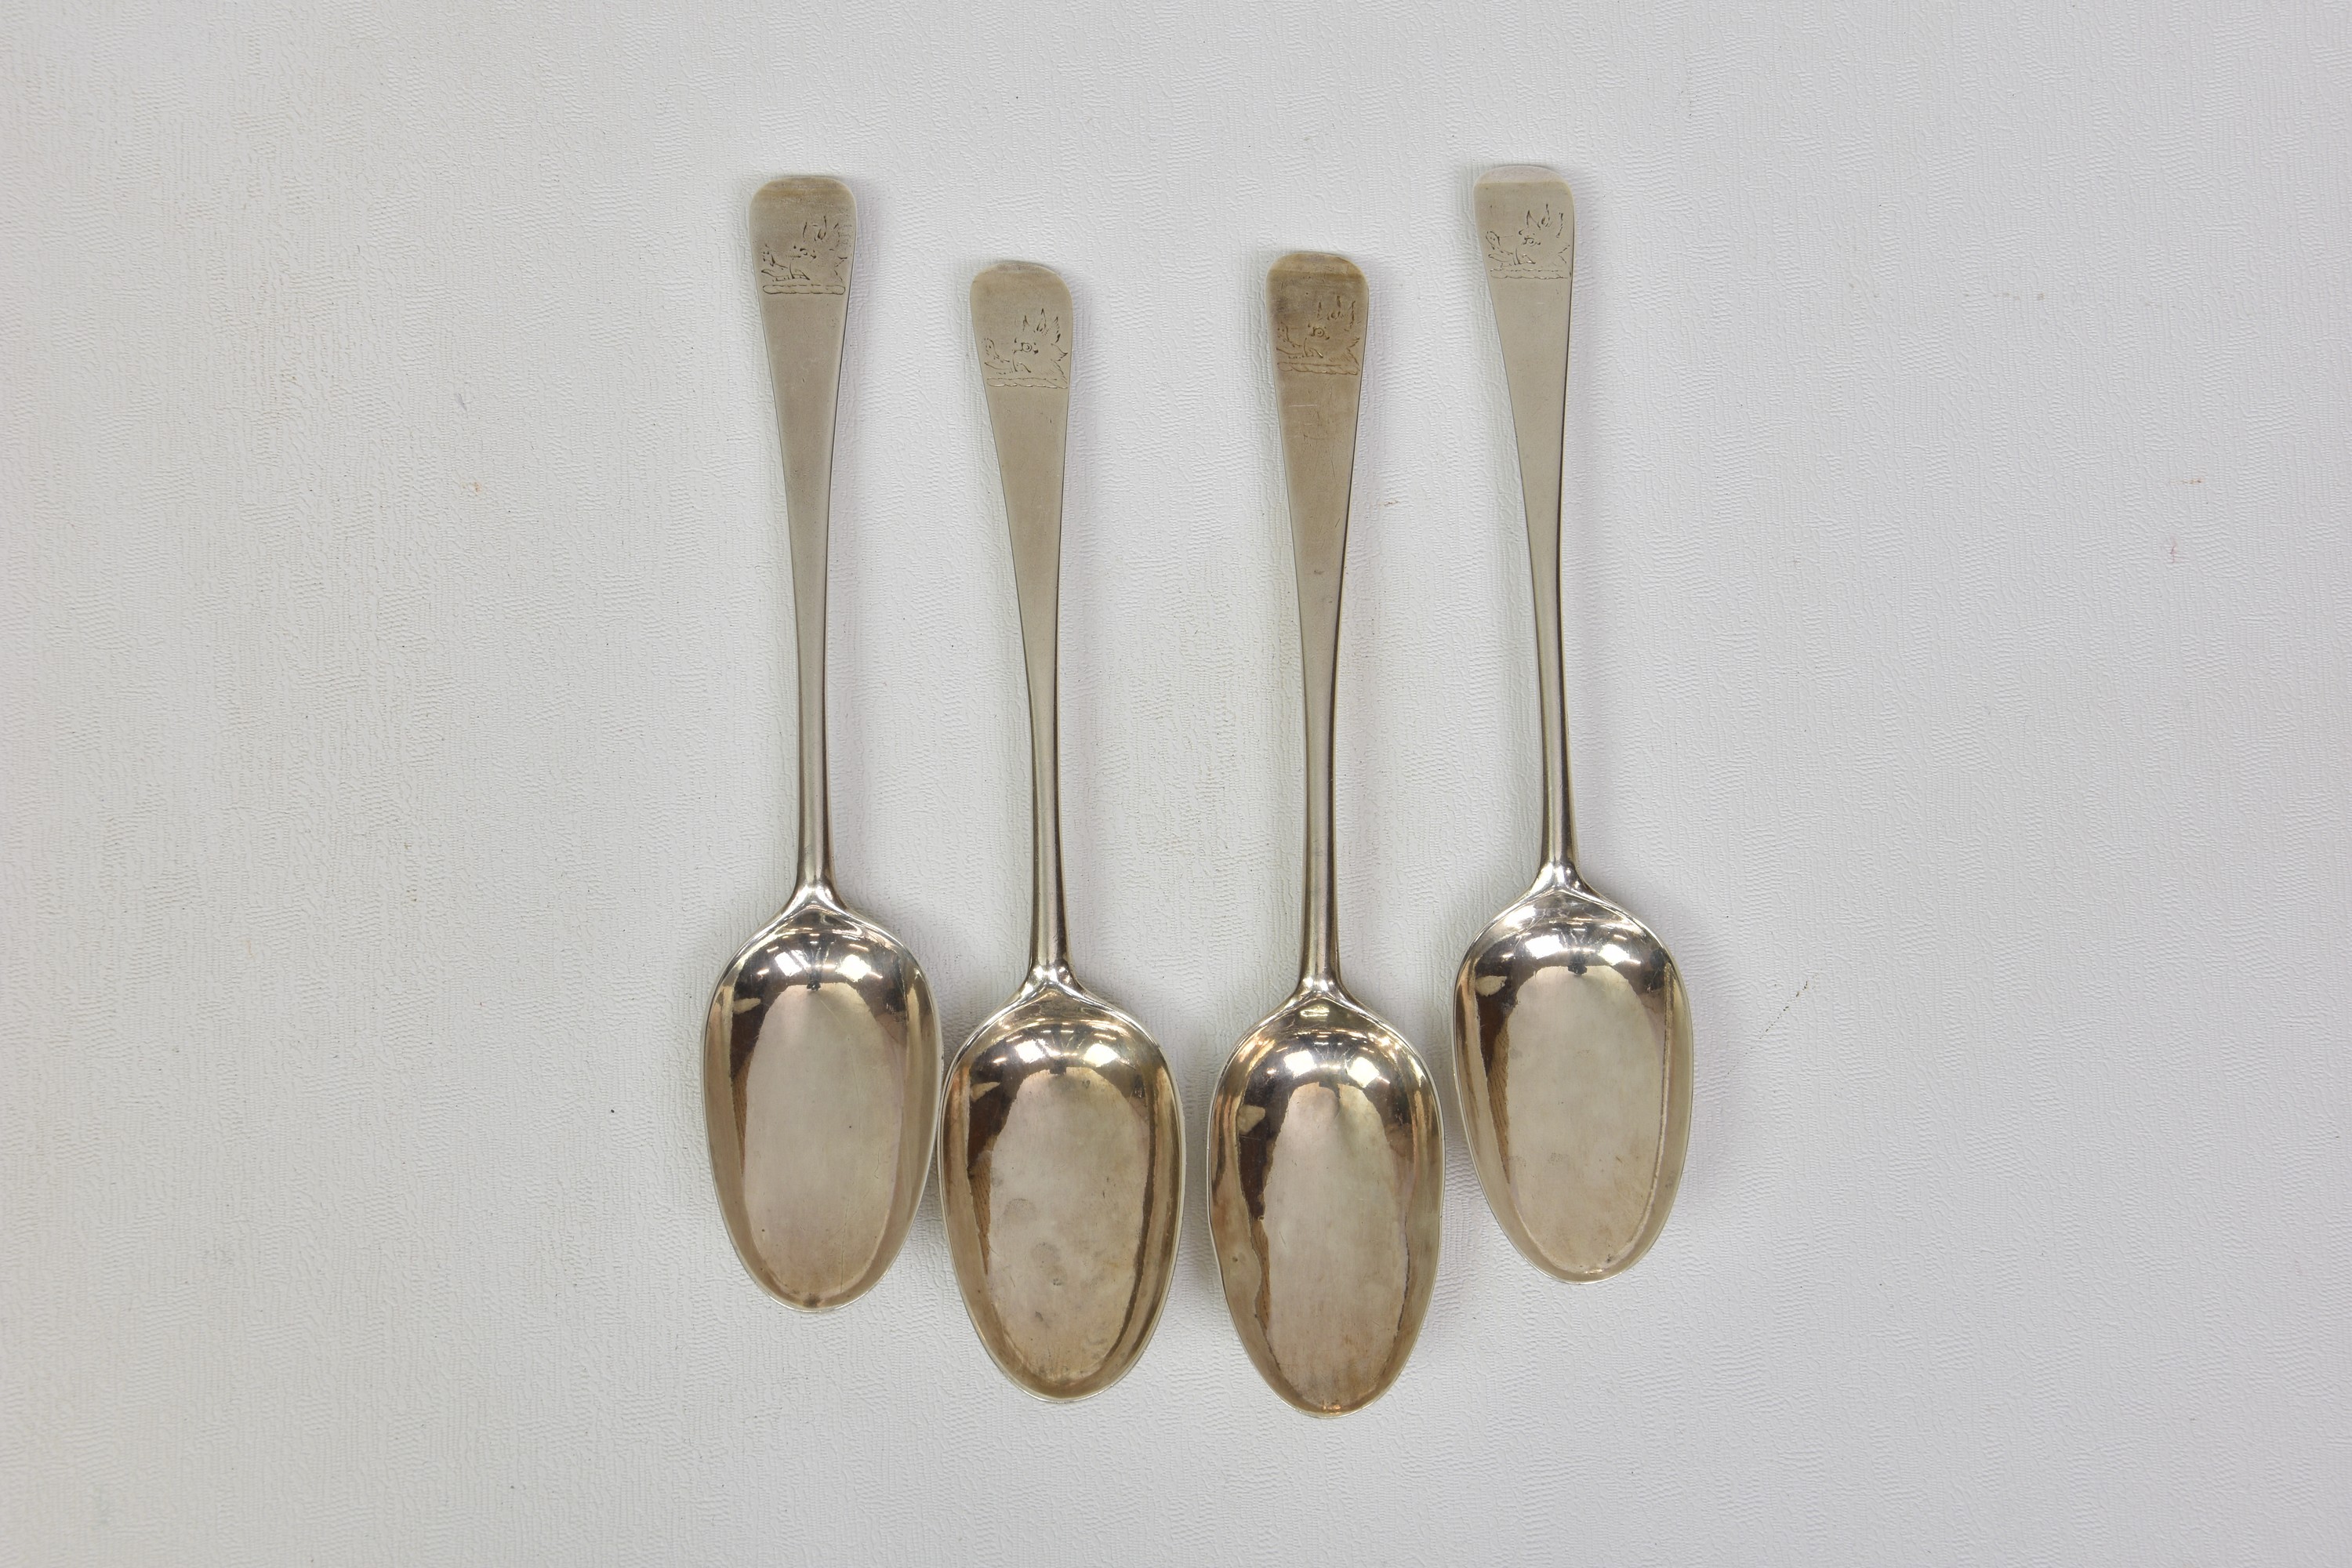 Four mid 18th century Irish Old English pattern silver dessert spoons, circa 1760, maker's mark '